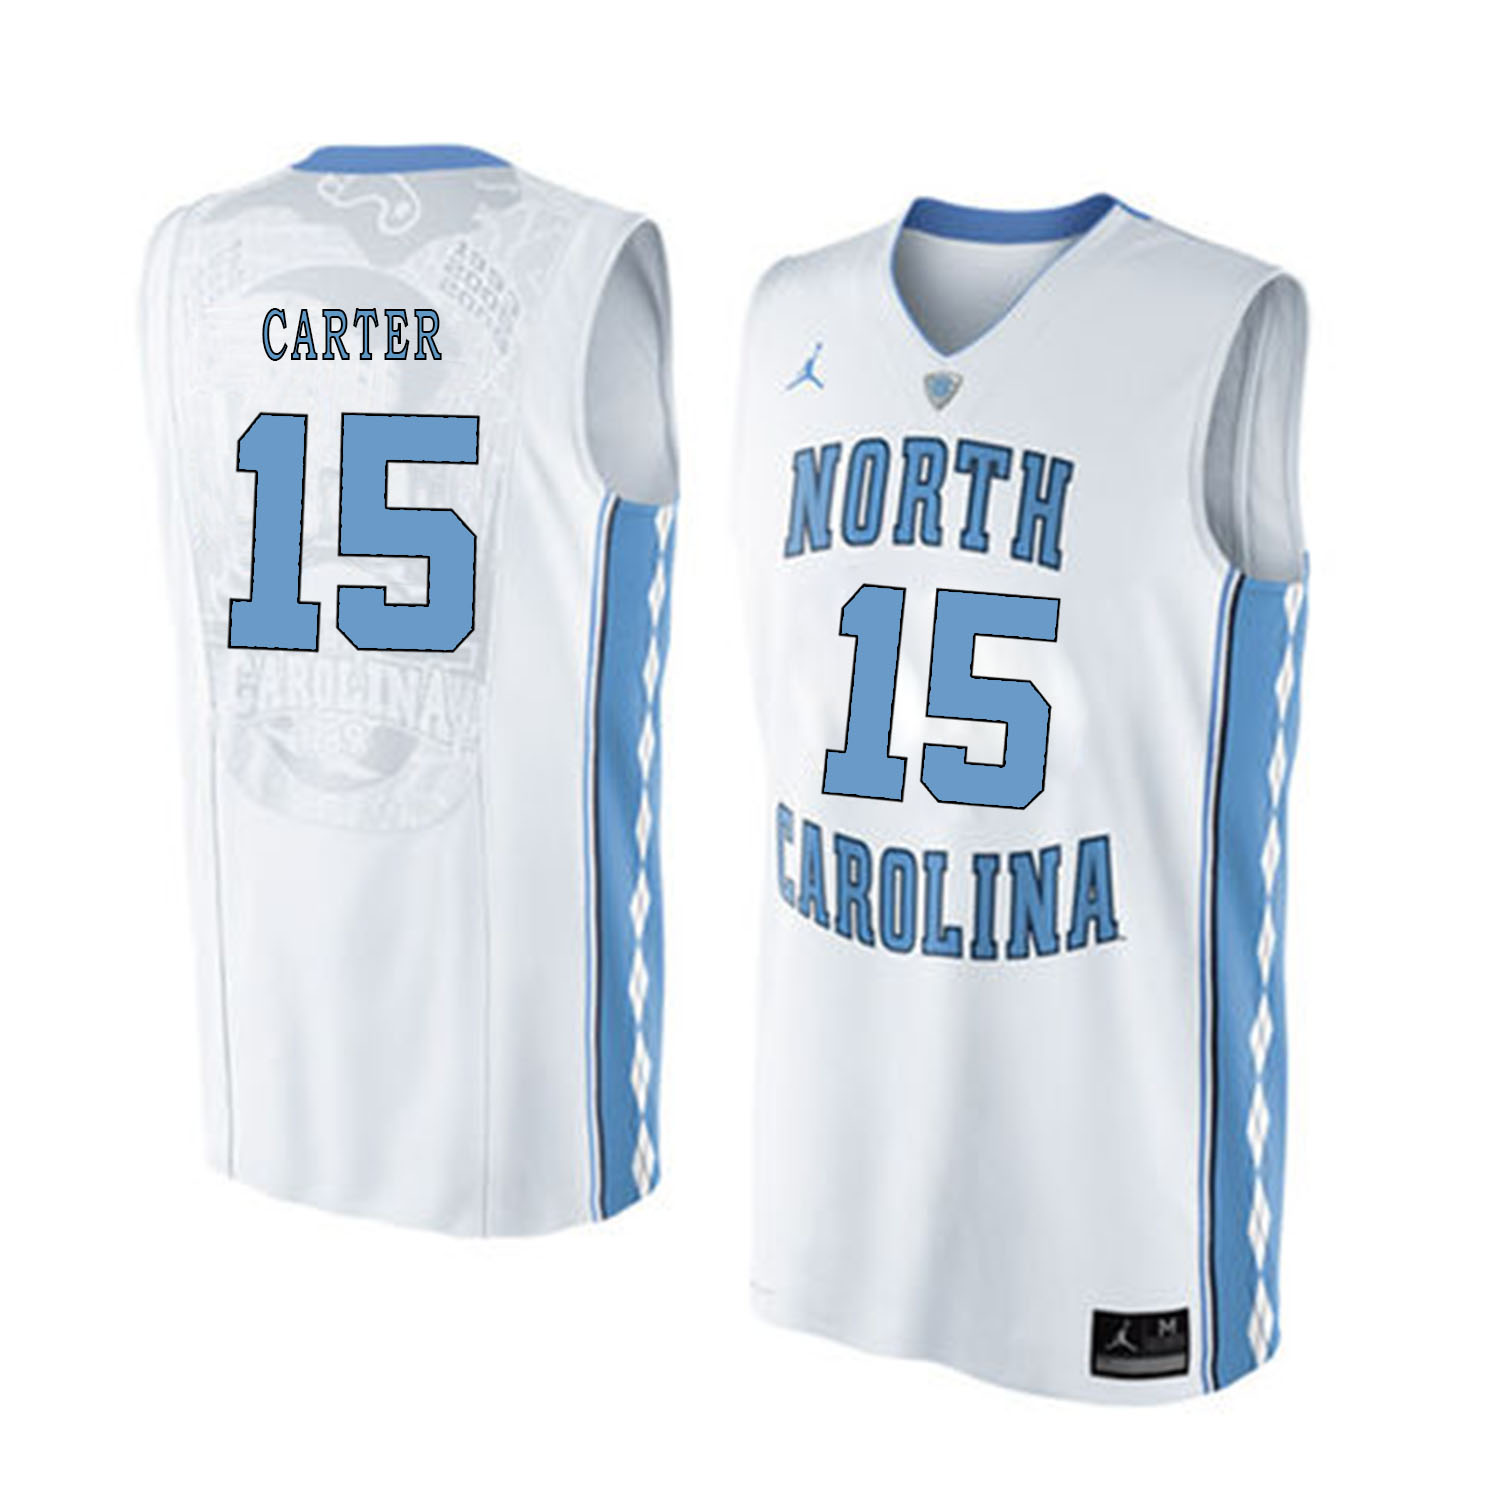 North Carolina Tar Heels 15 Vince Carter White College Basketball Jersey